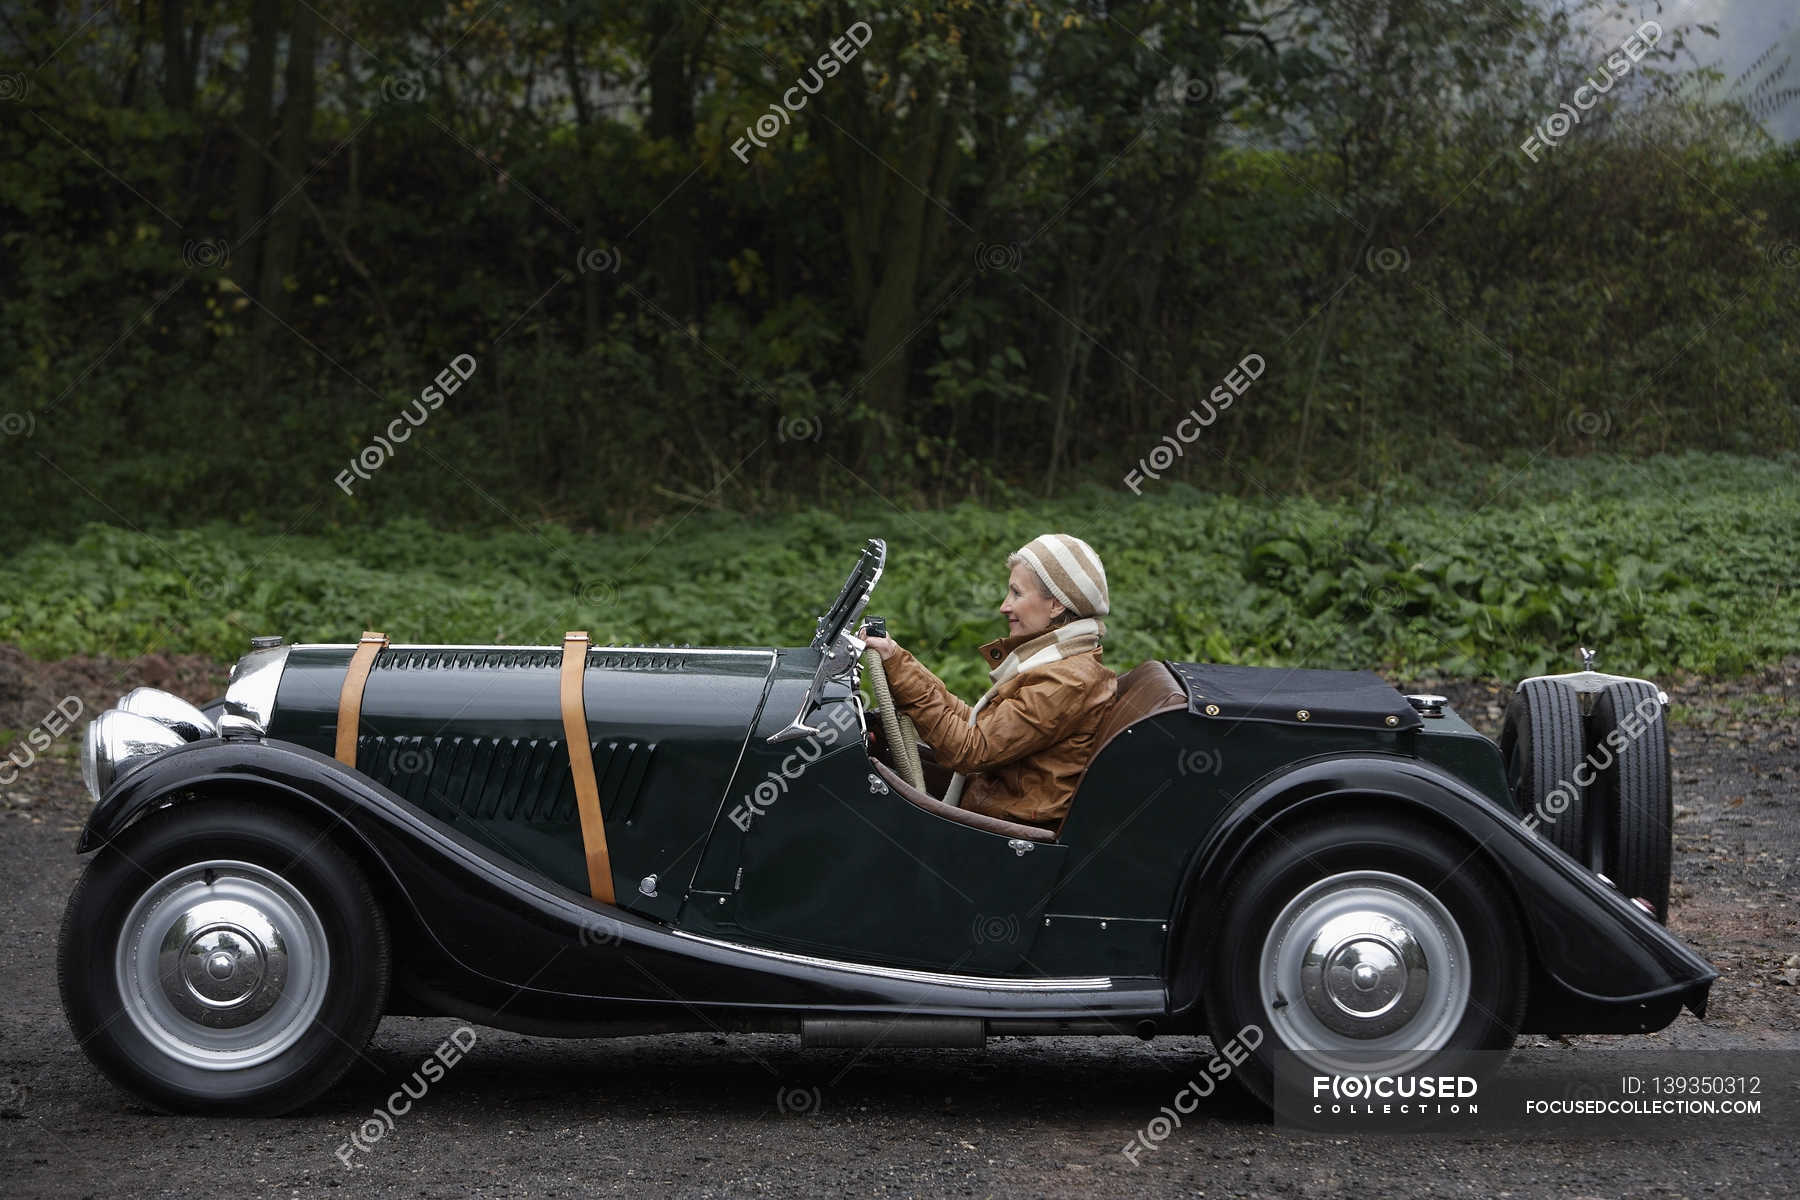 Senior woman driving antique car — Stock Photo | #139350312